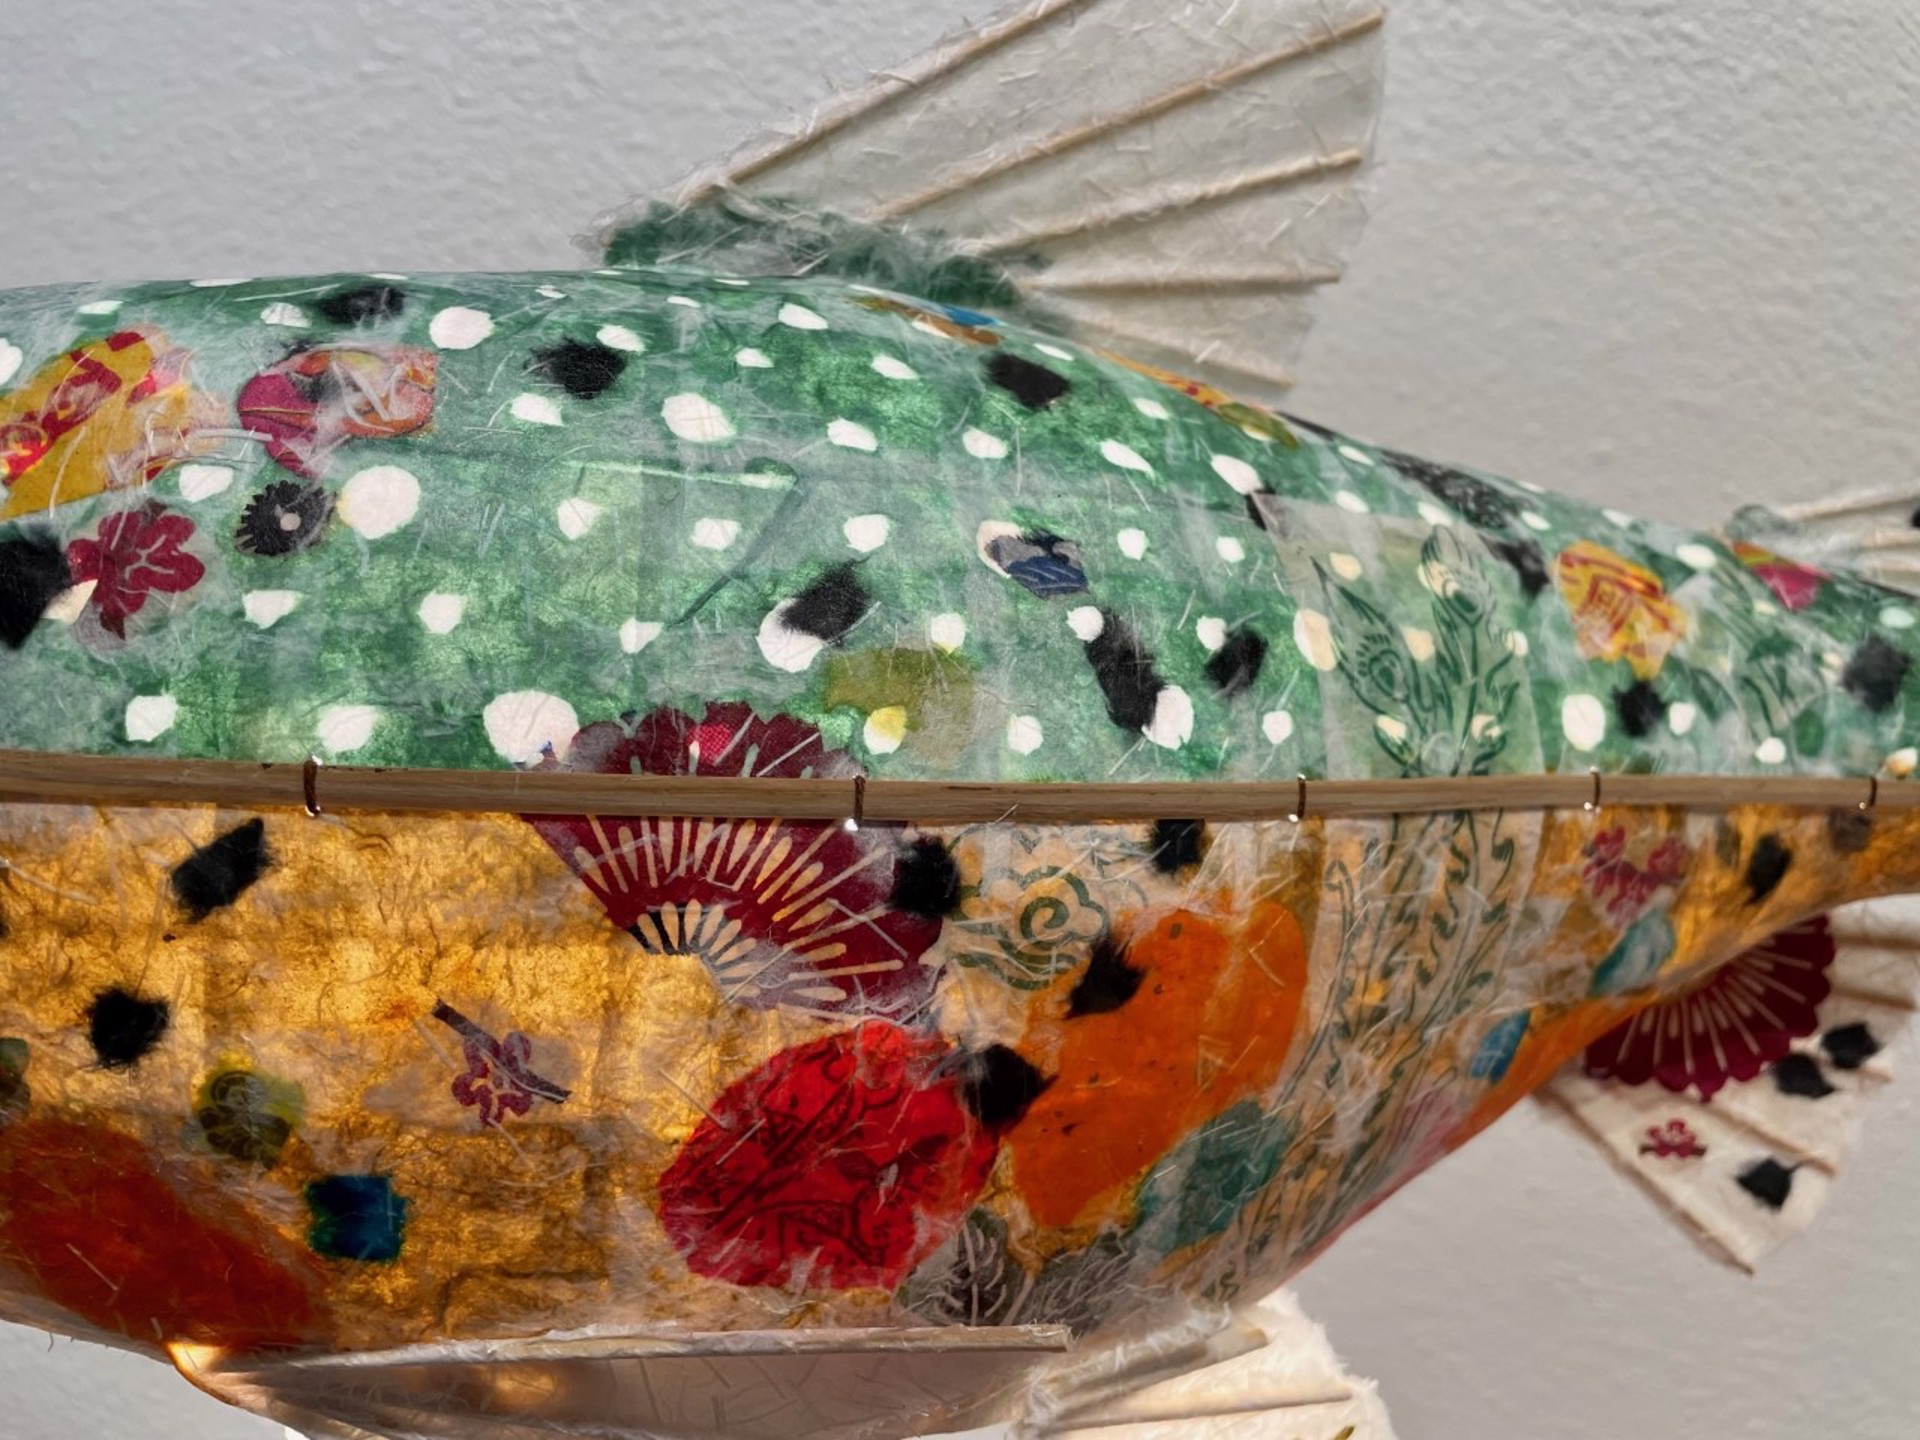 Jade Salmon Commission by Elaine Hanowell